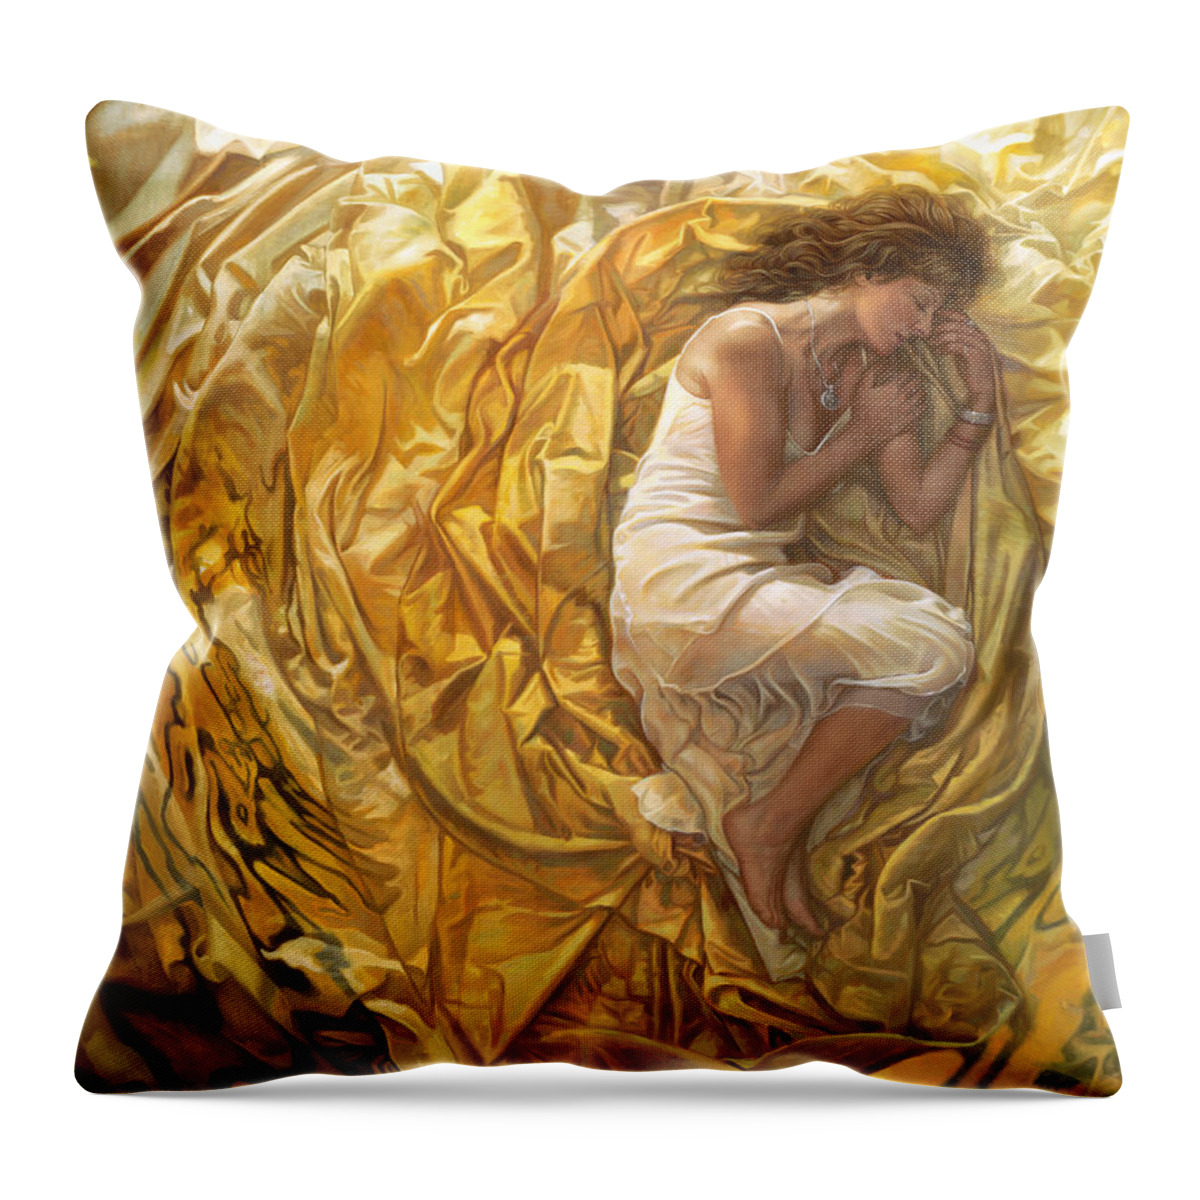 Conceptual Throw Pillow featuring the painting Santita by Mia Tavonatti